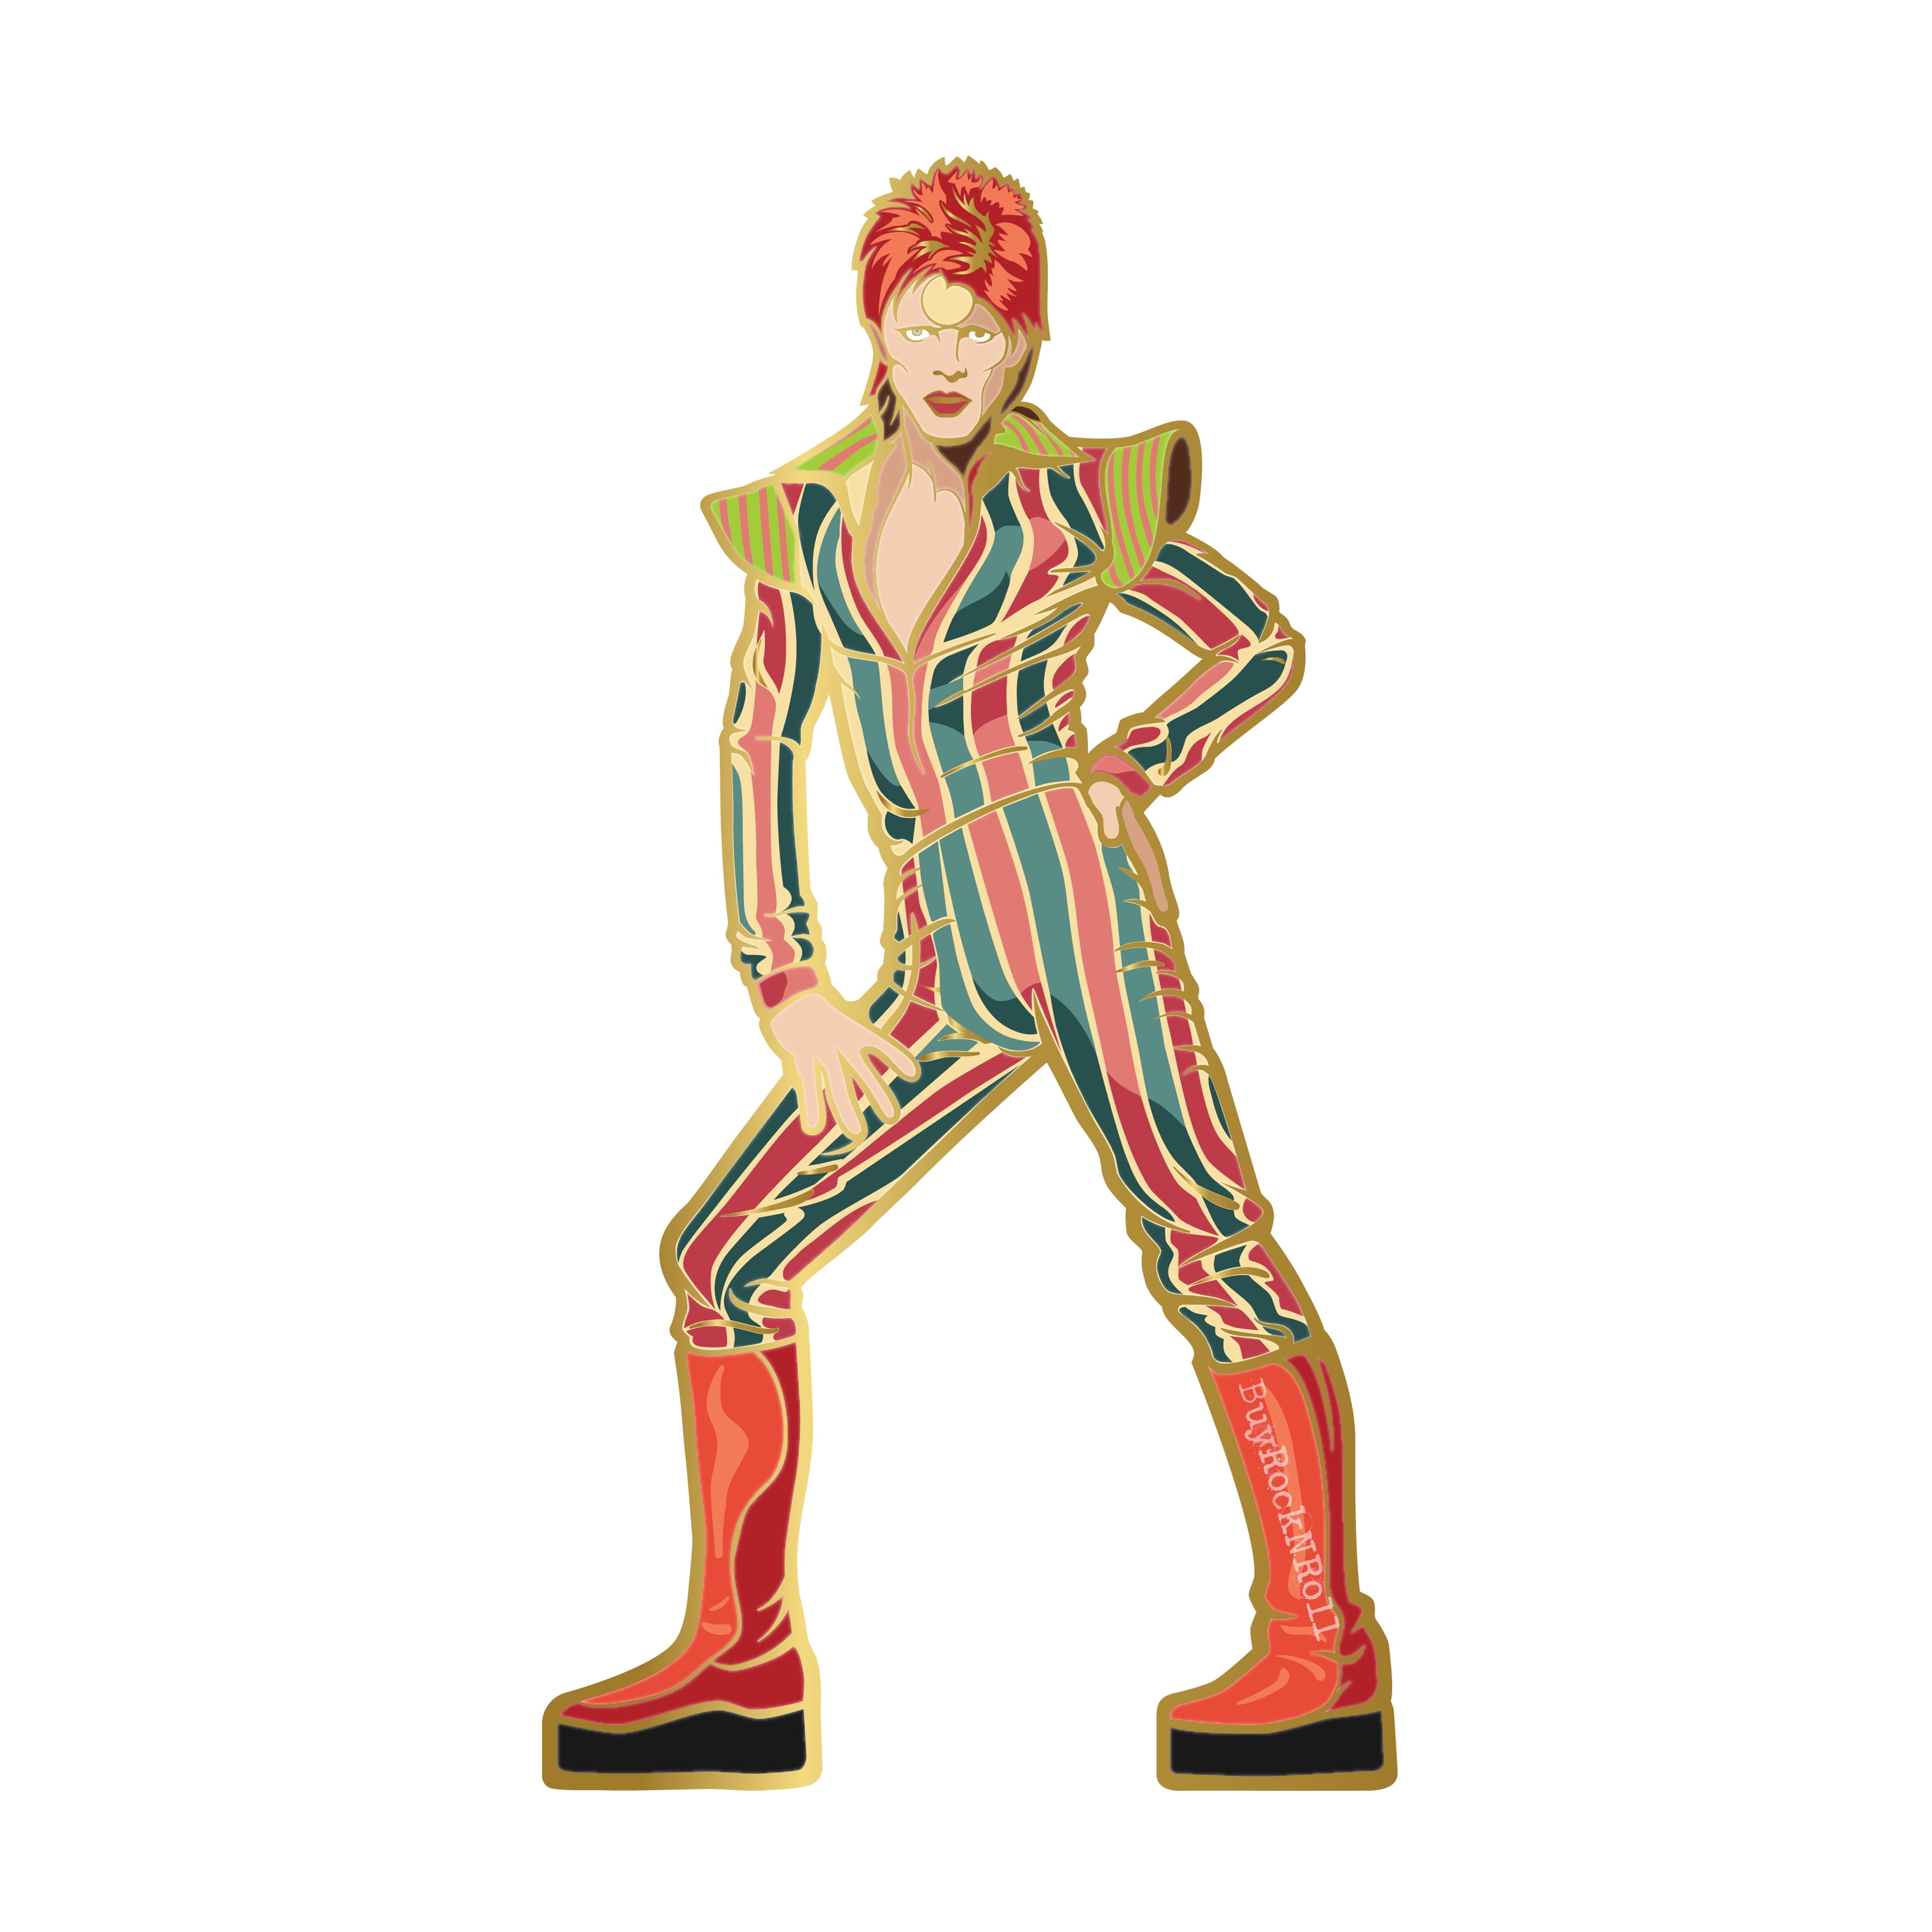 David Bowie 2019 FiGPiN Ziggy Stardust Pin #177 in Custom Display & Jewel Case